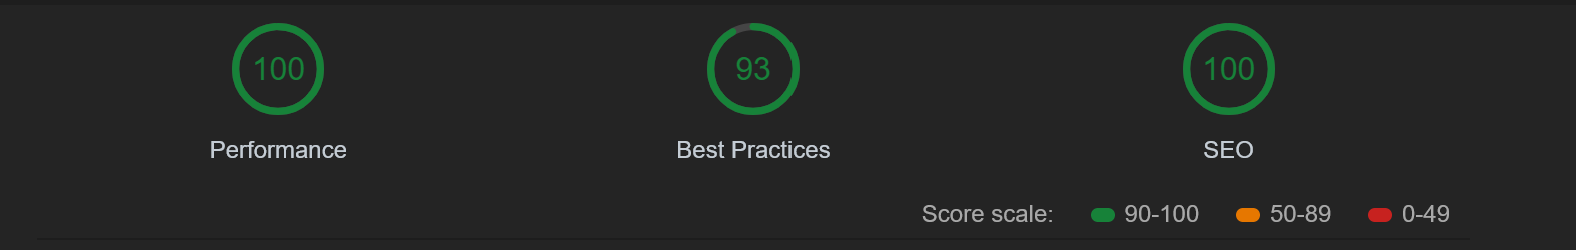 Performance: 100/100, Best Practices: 93/100, SEO: 100/100